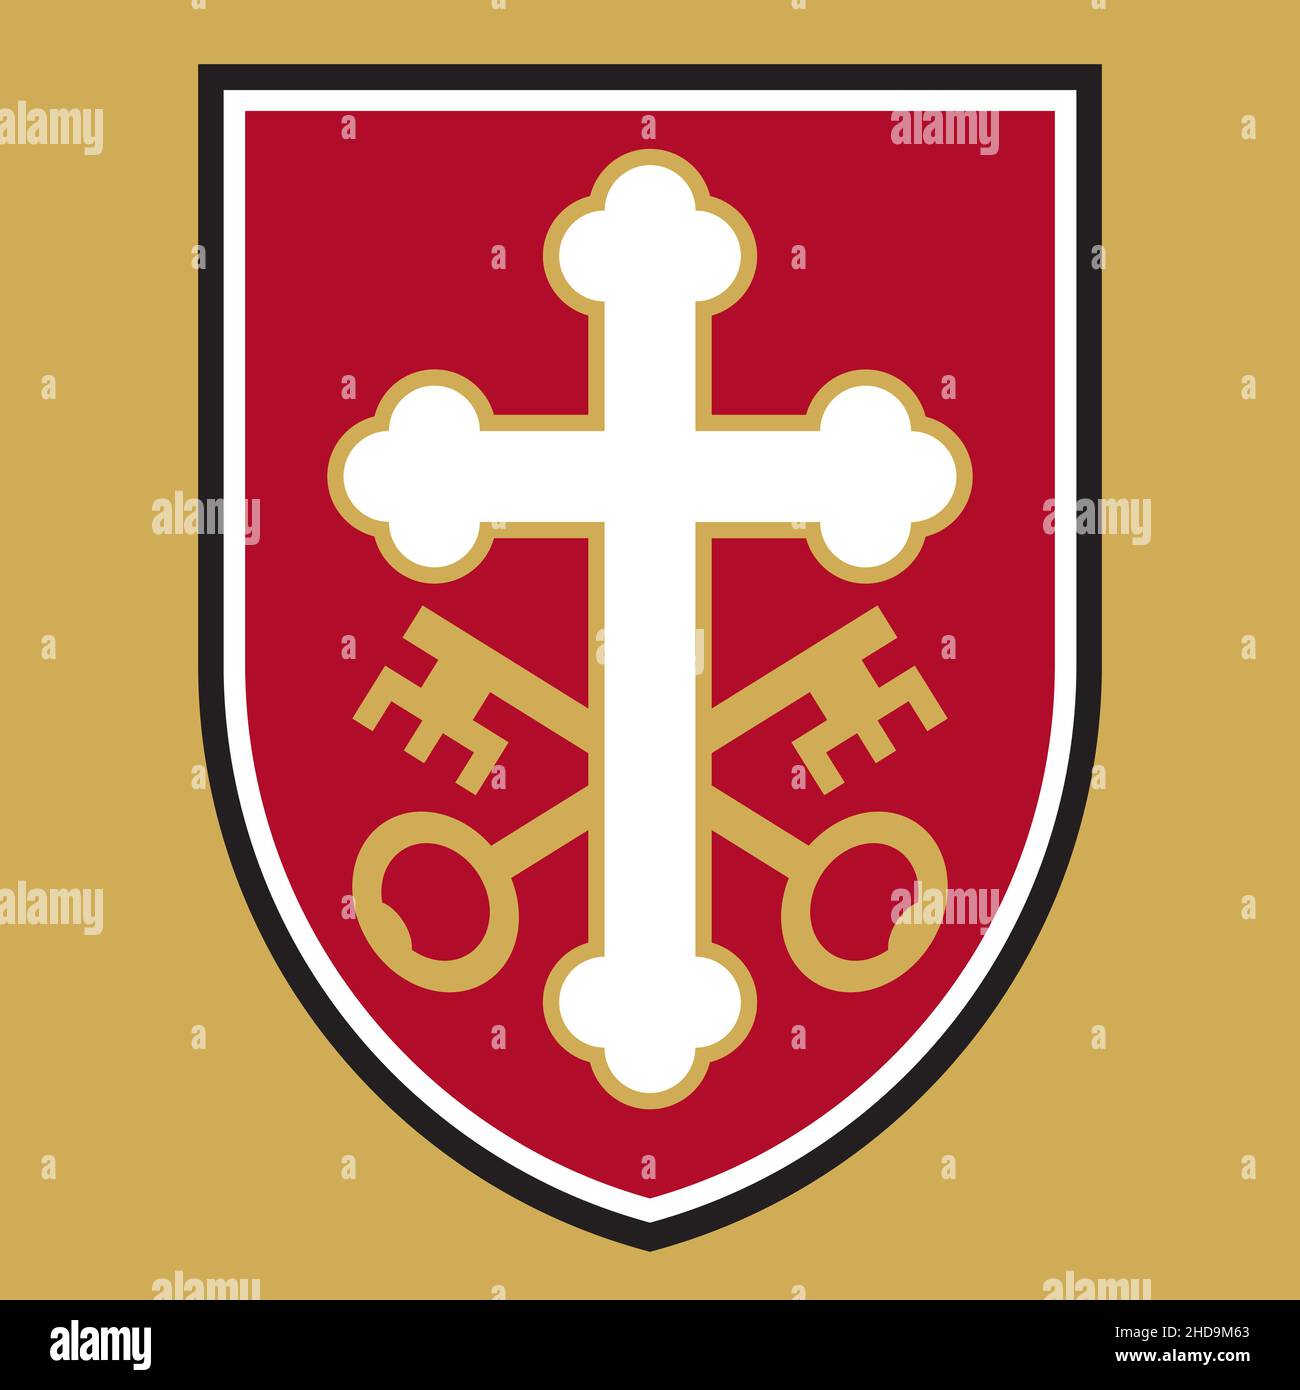 Christian cross badge or logo design with crossed keys. Vector illustration of ornate cross on shield design featuring the crossed keys of St. Peter. Stock Vector